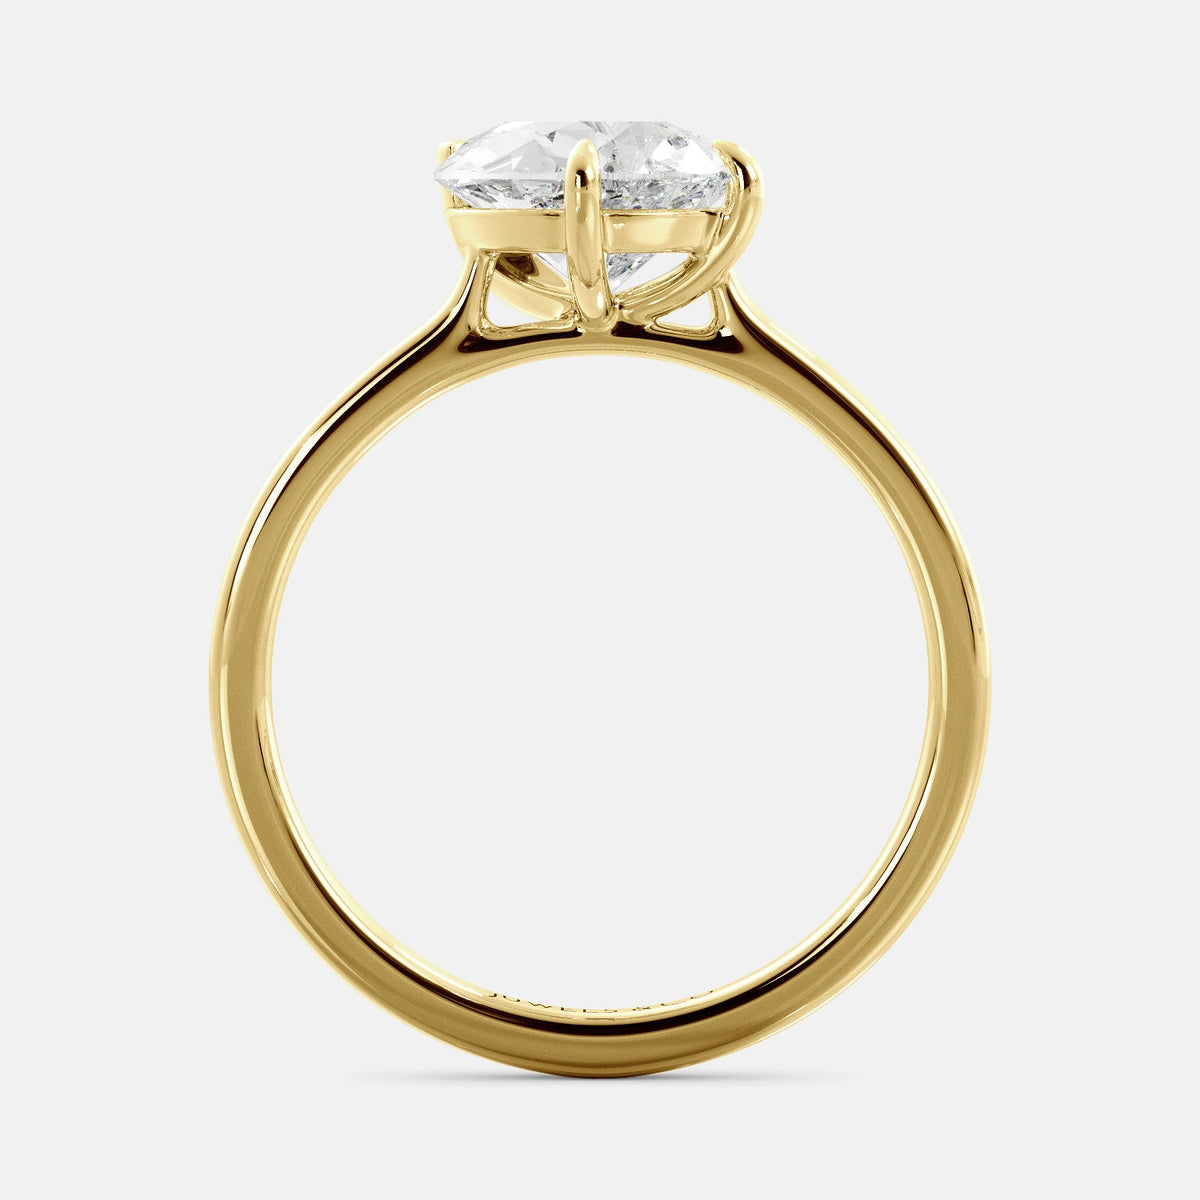 The Emilia Pear Diamond Ring: Where Elegance Meets Empowerment